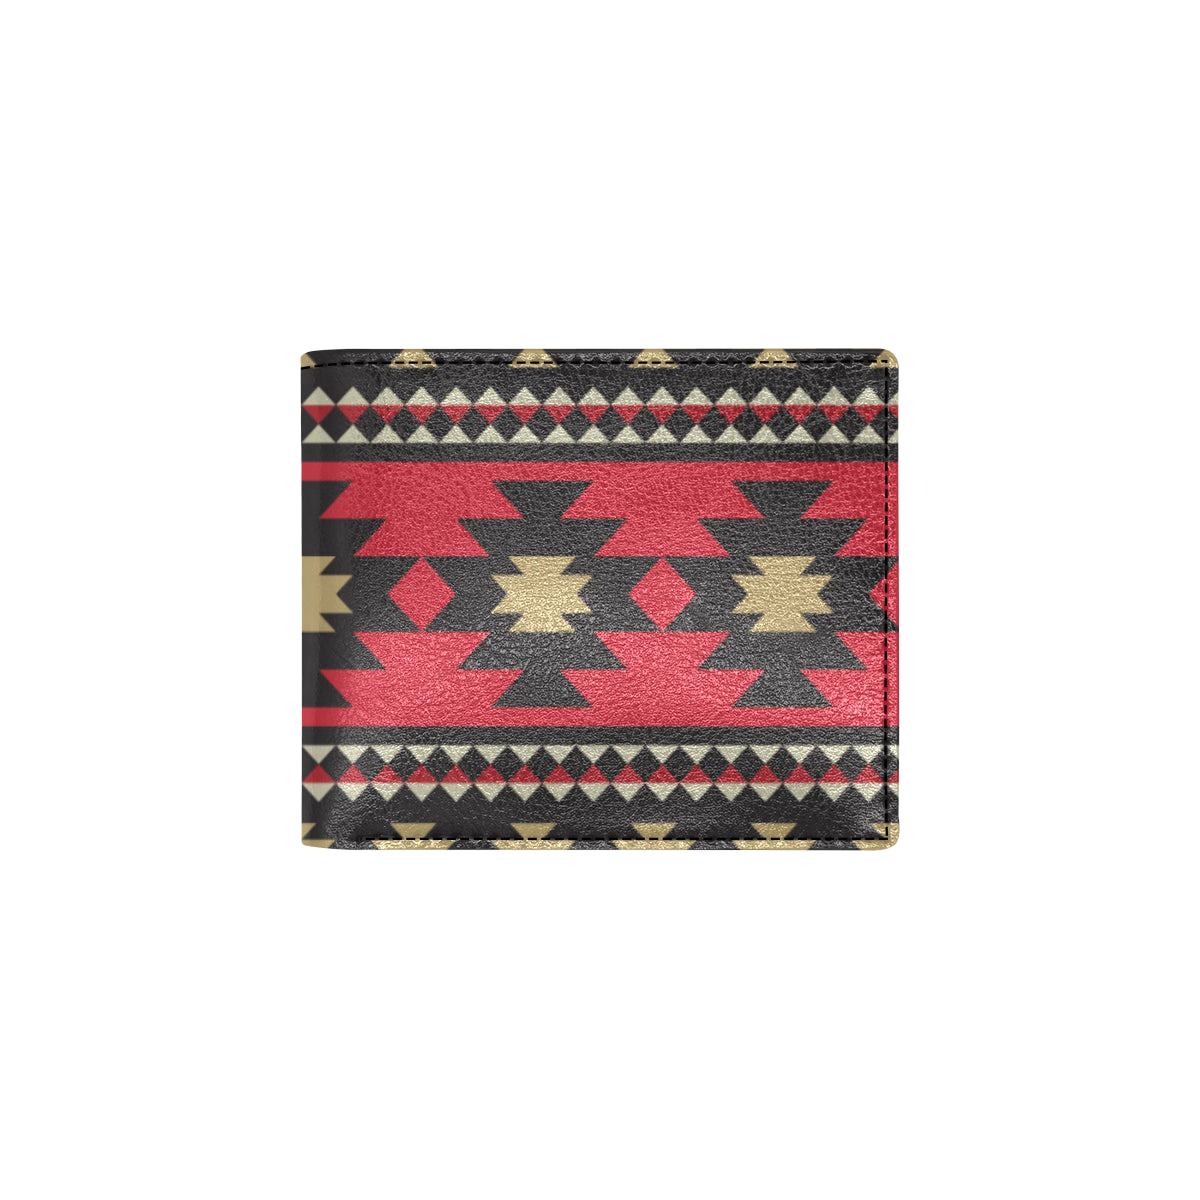 Navajo Pattern Print Design A04 Men's ID Card Wallet